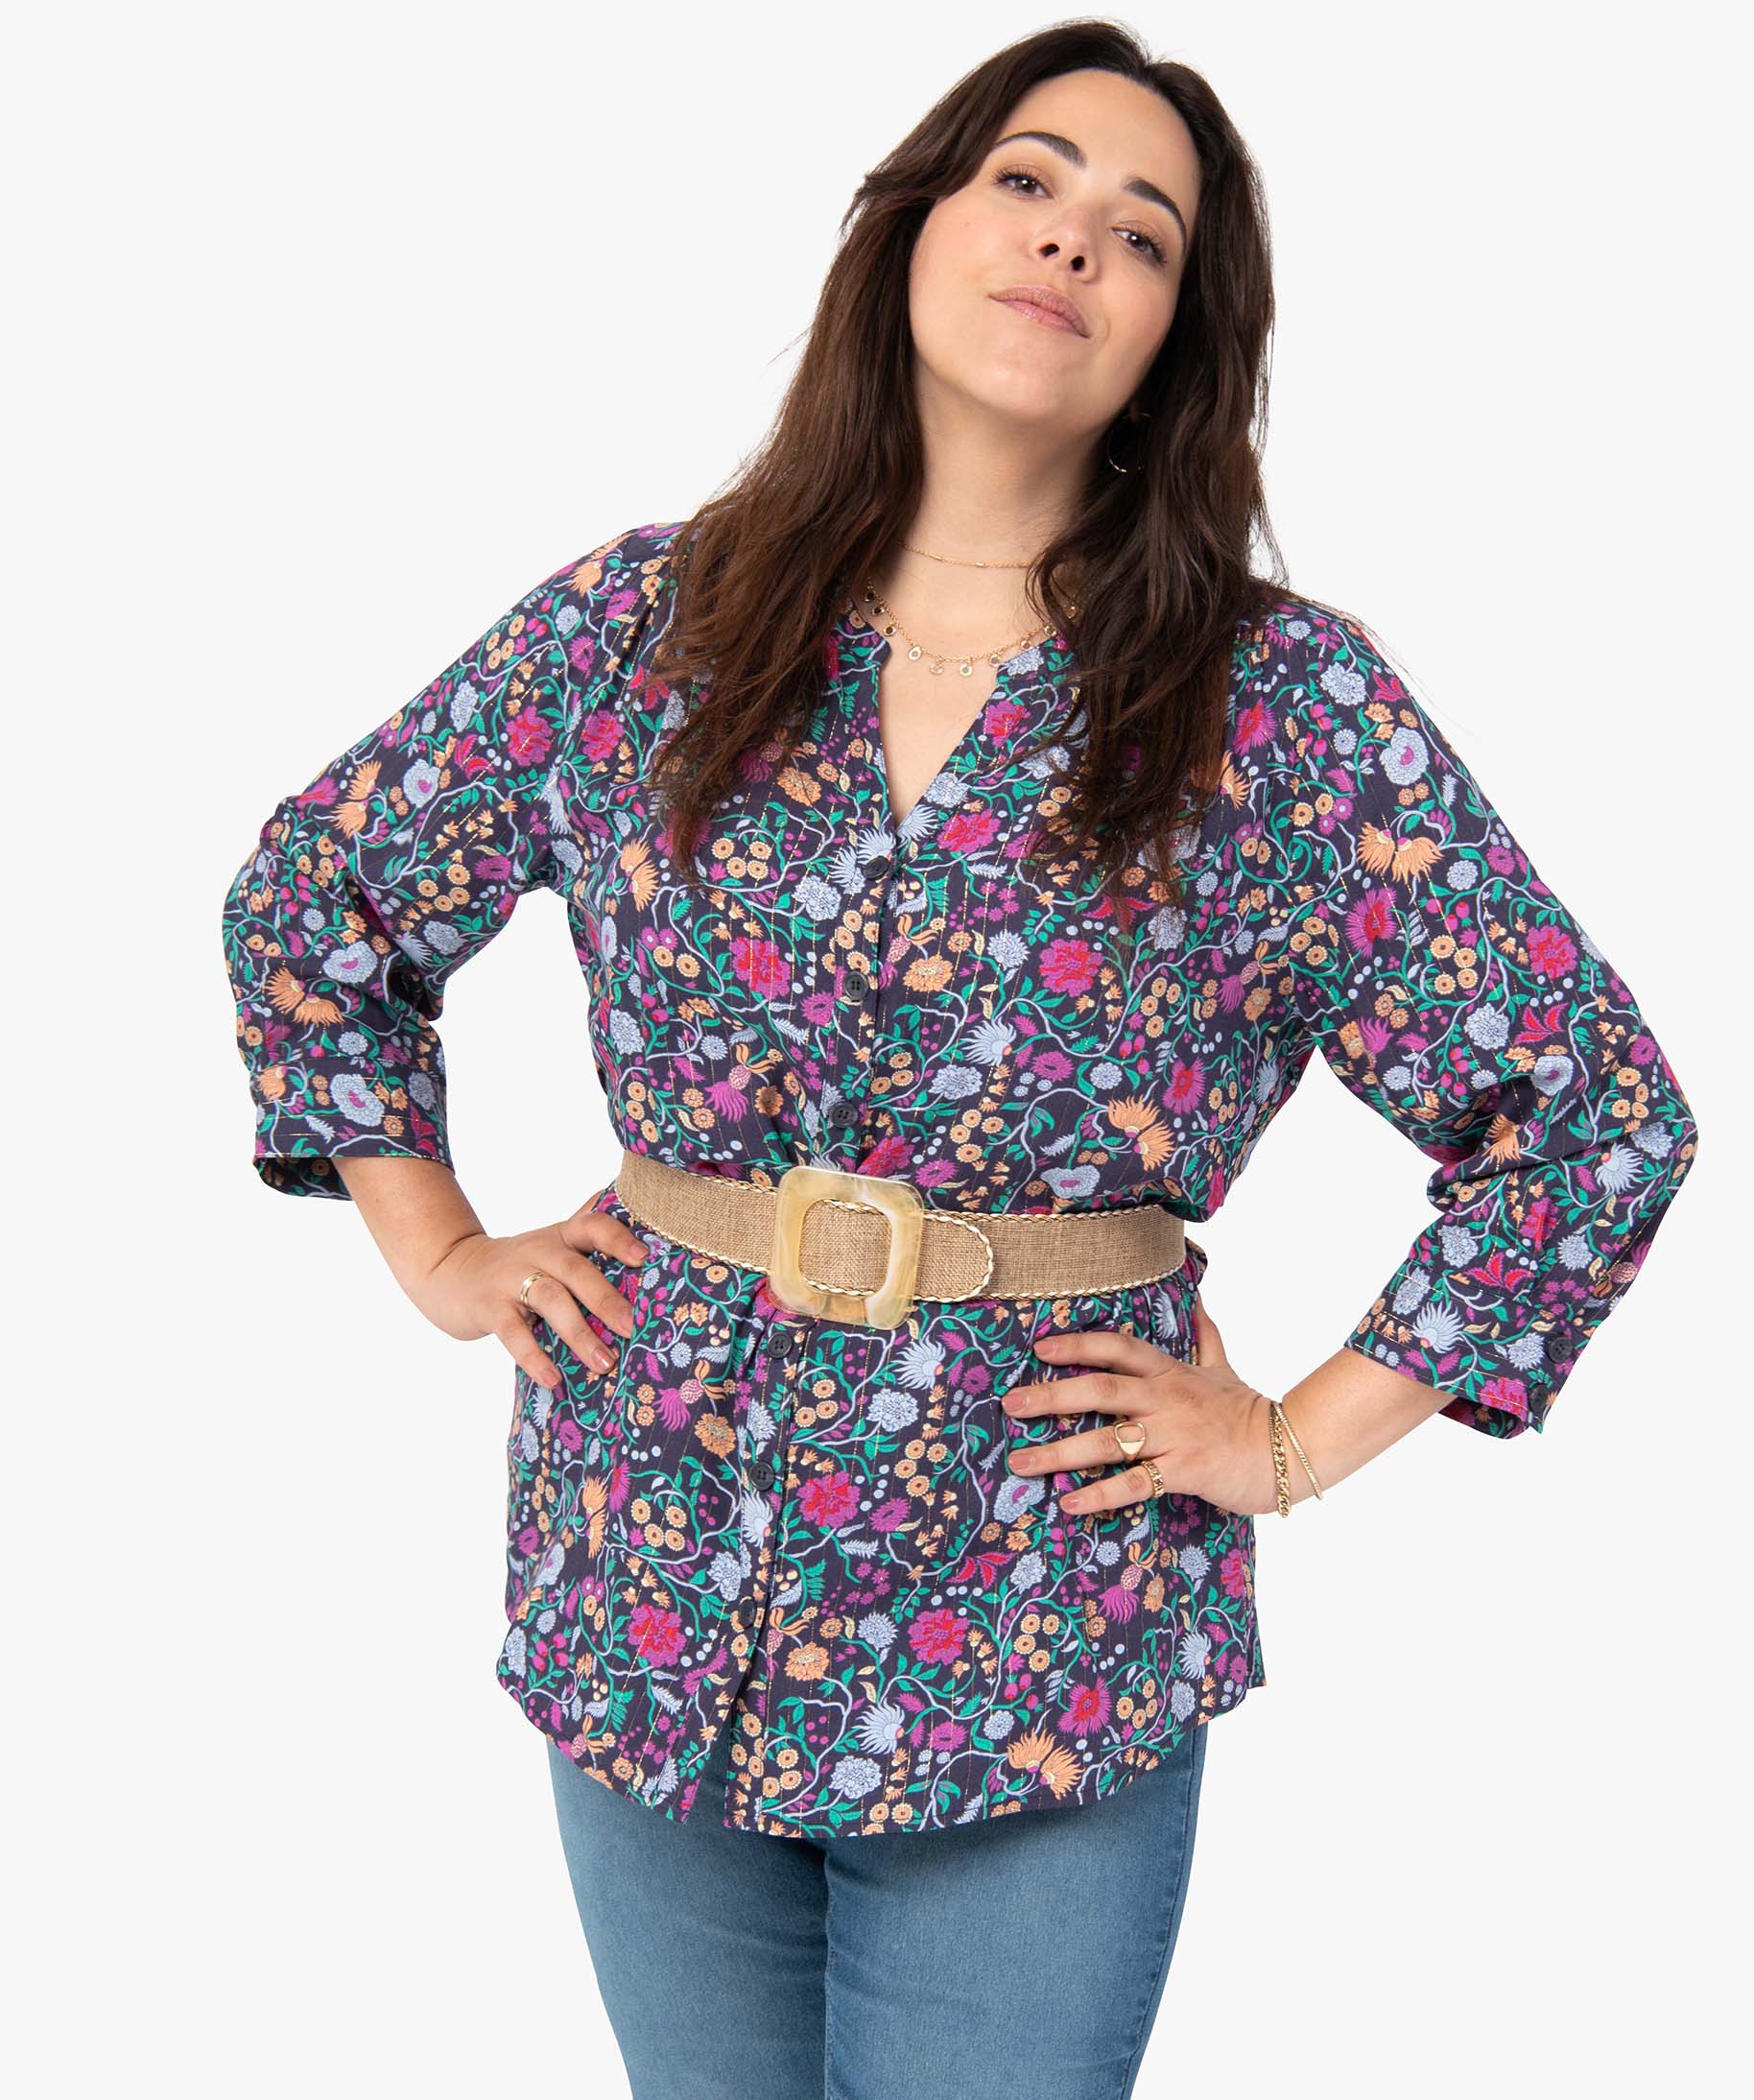 blouse femme grande taille imprimee a rayures pailletees imprime chemisiers et blouses